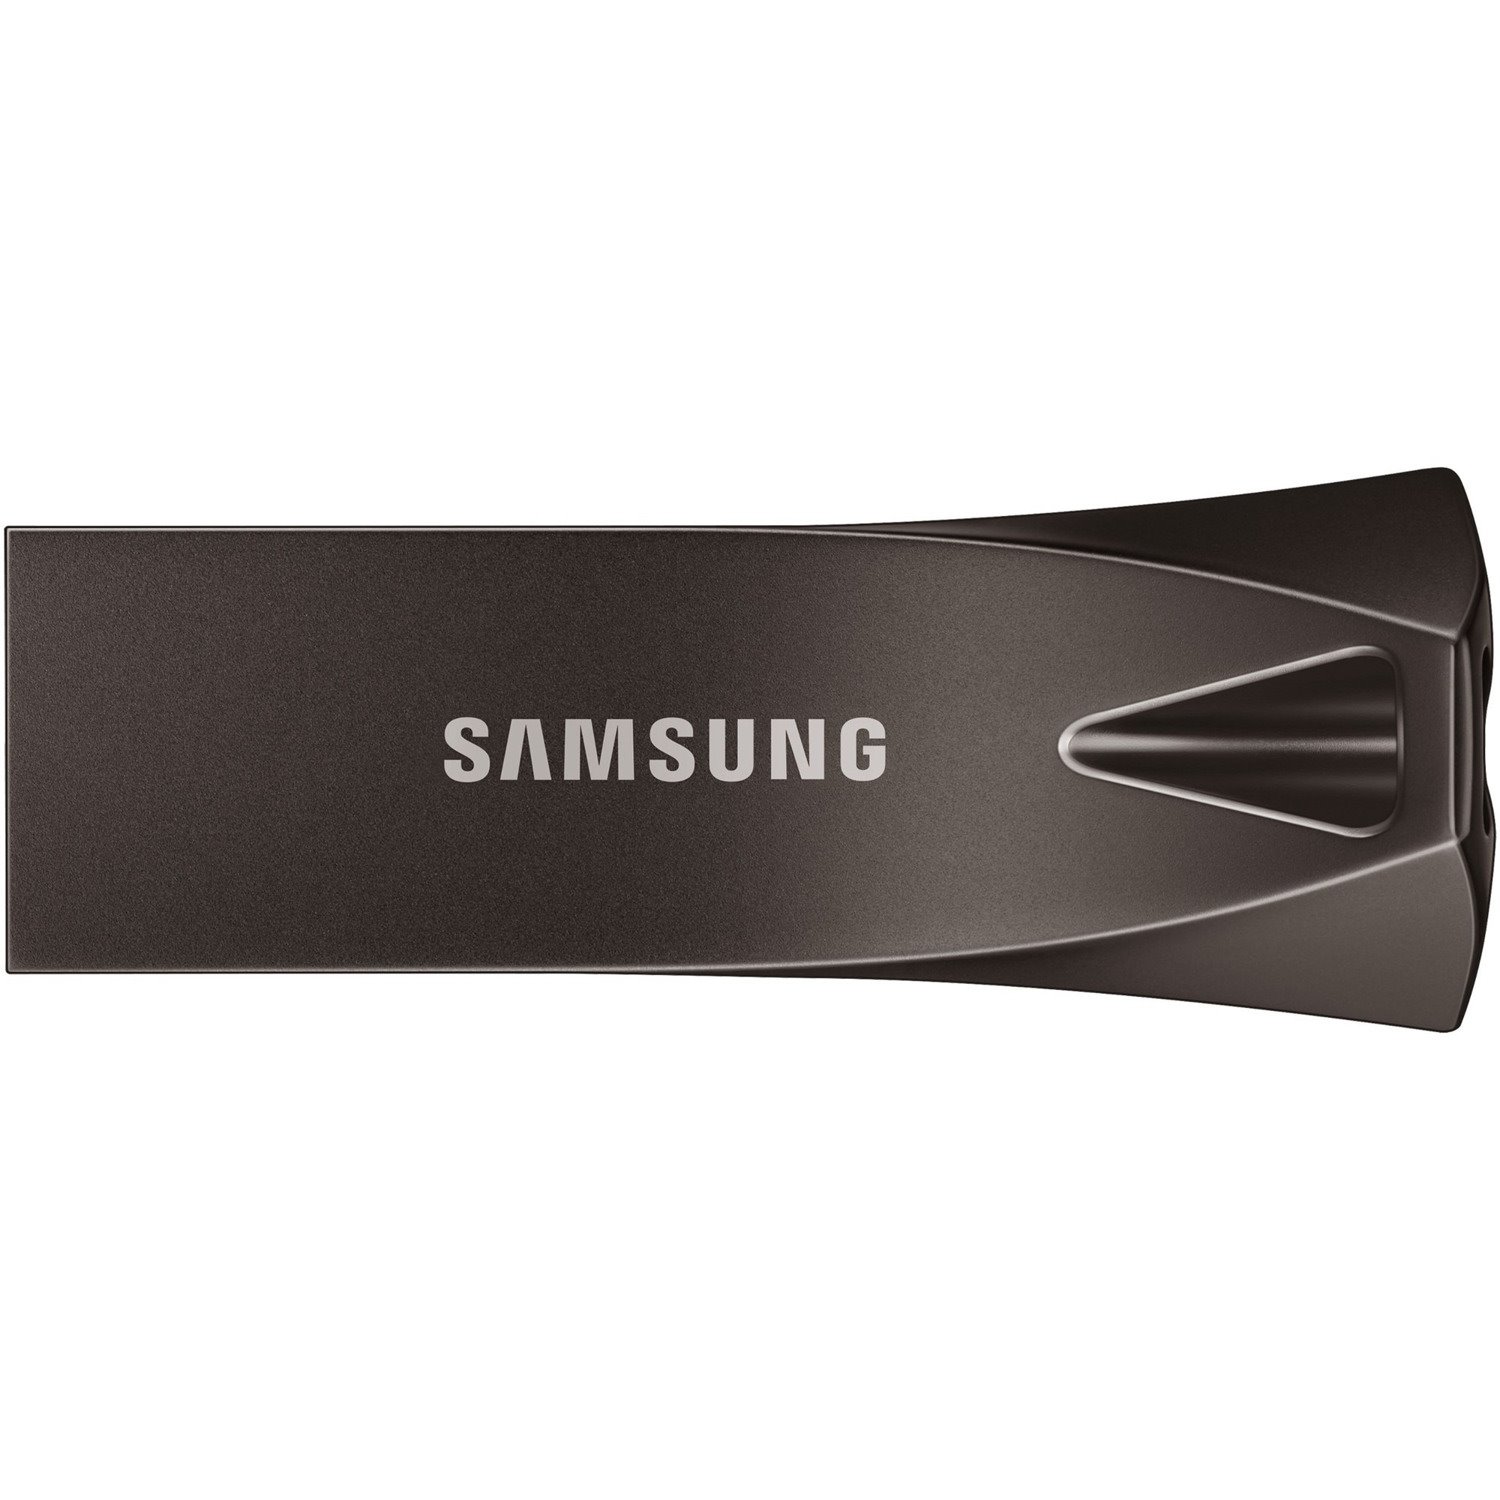 Samsung BAR Plus 64 GB USB 3.1 Type A Flash Drive - Silver